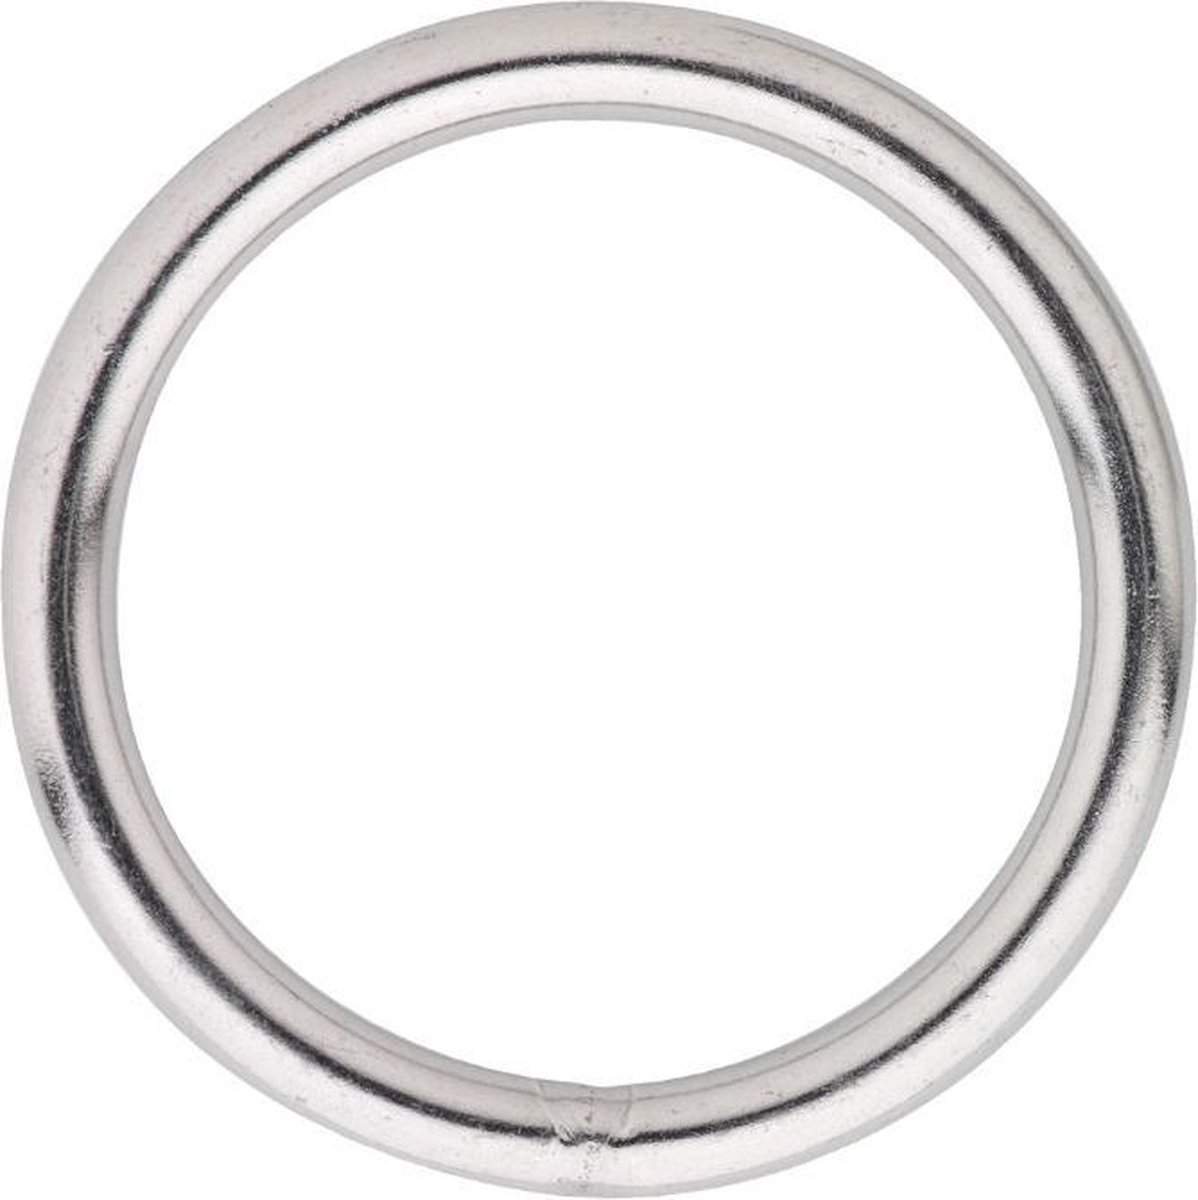 O-ring - 40 - stuks bol.com